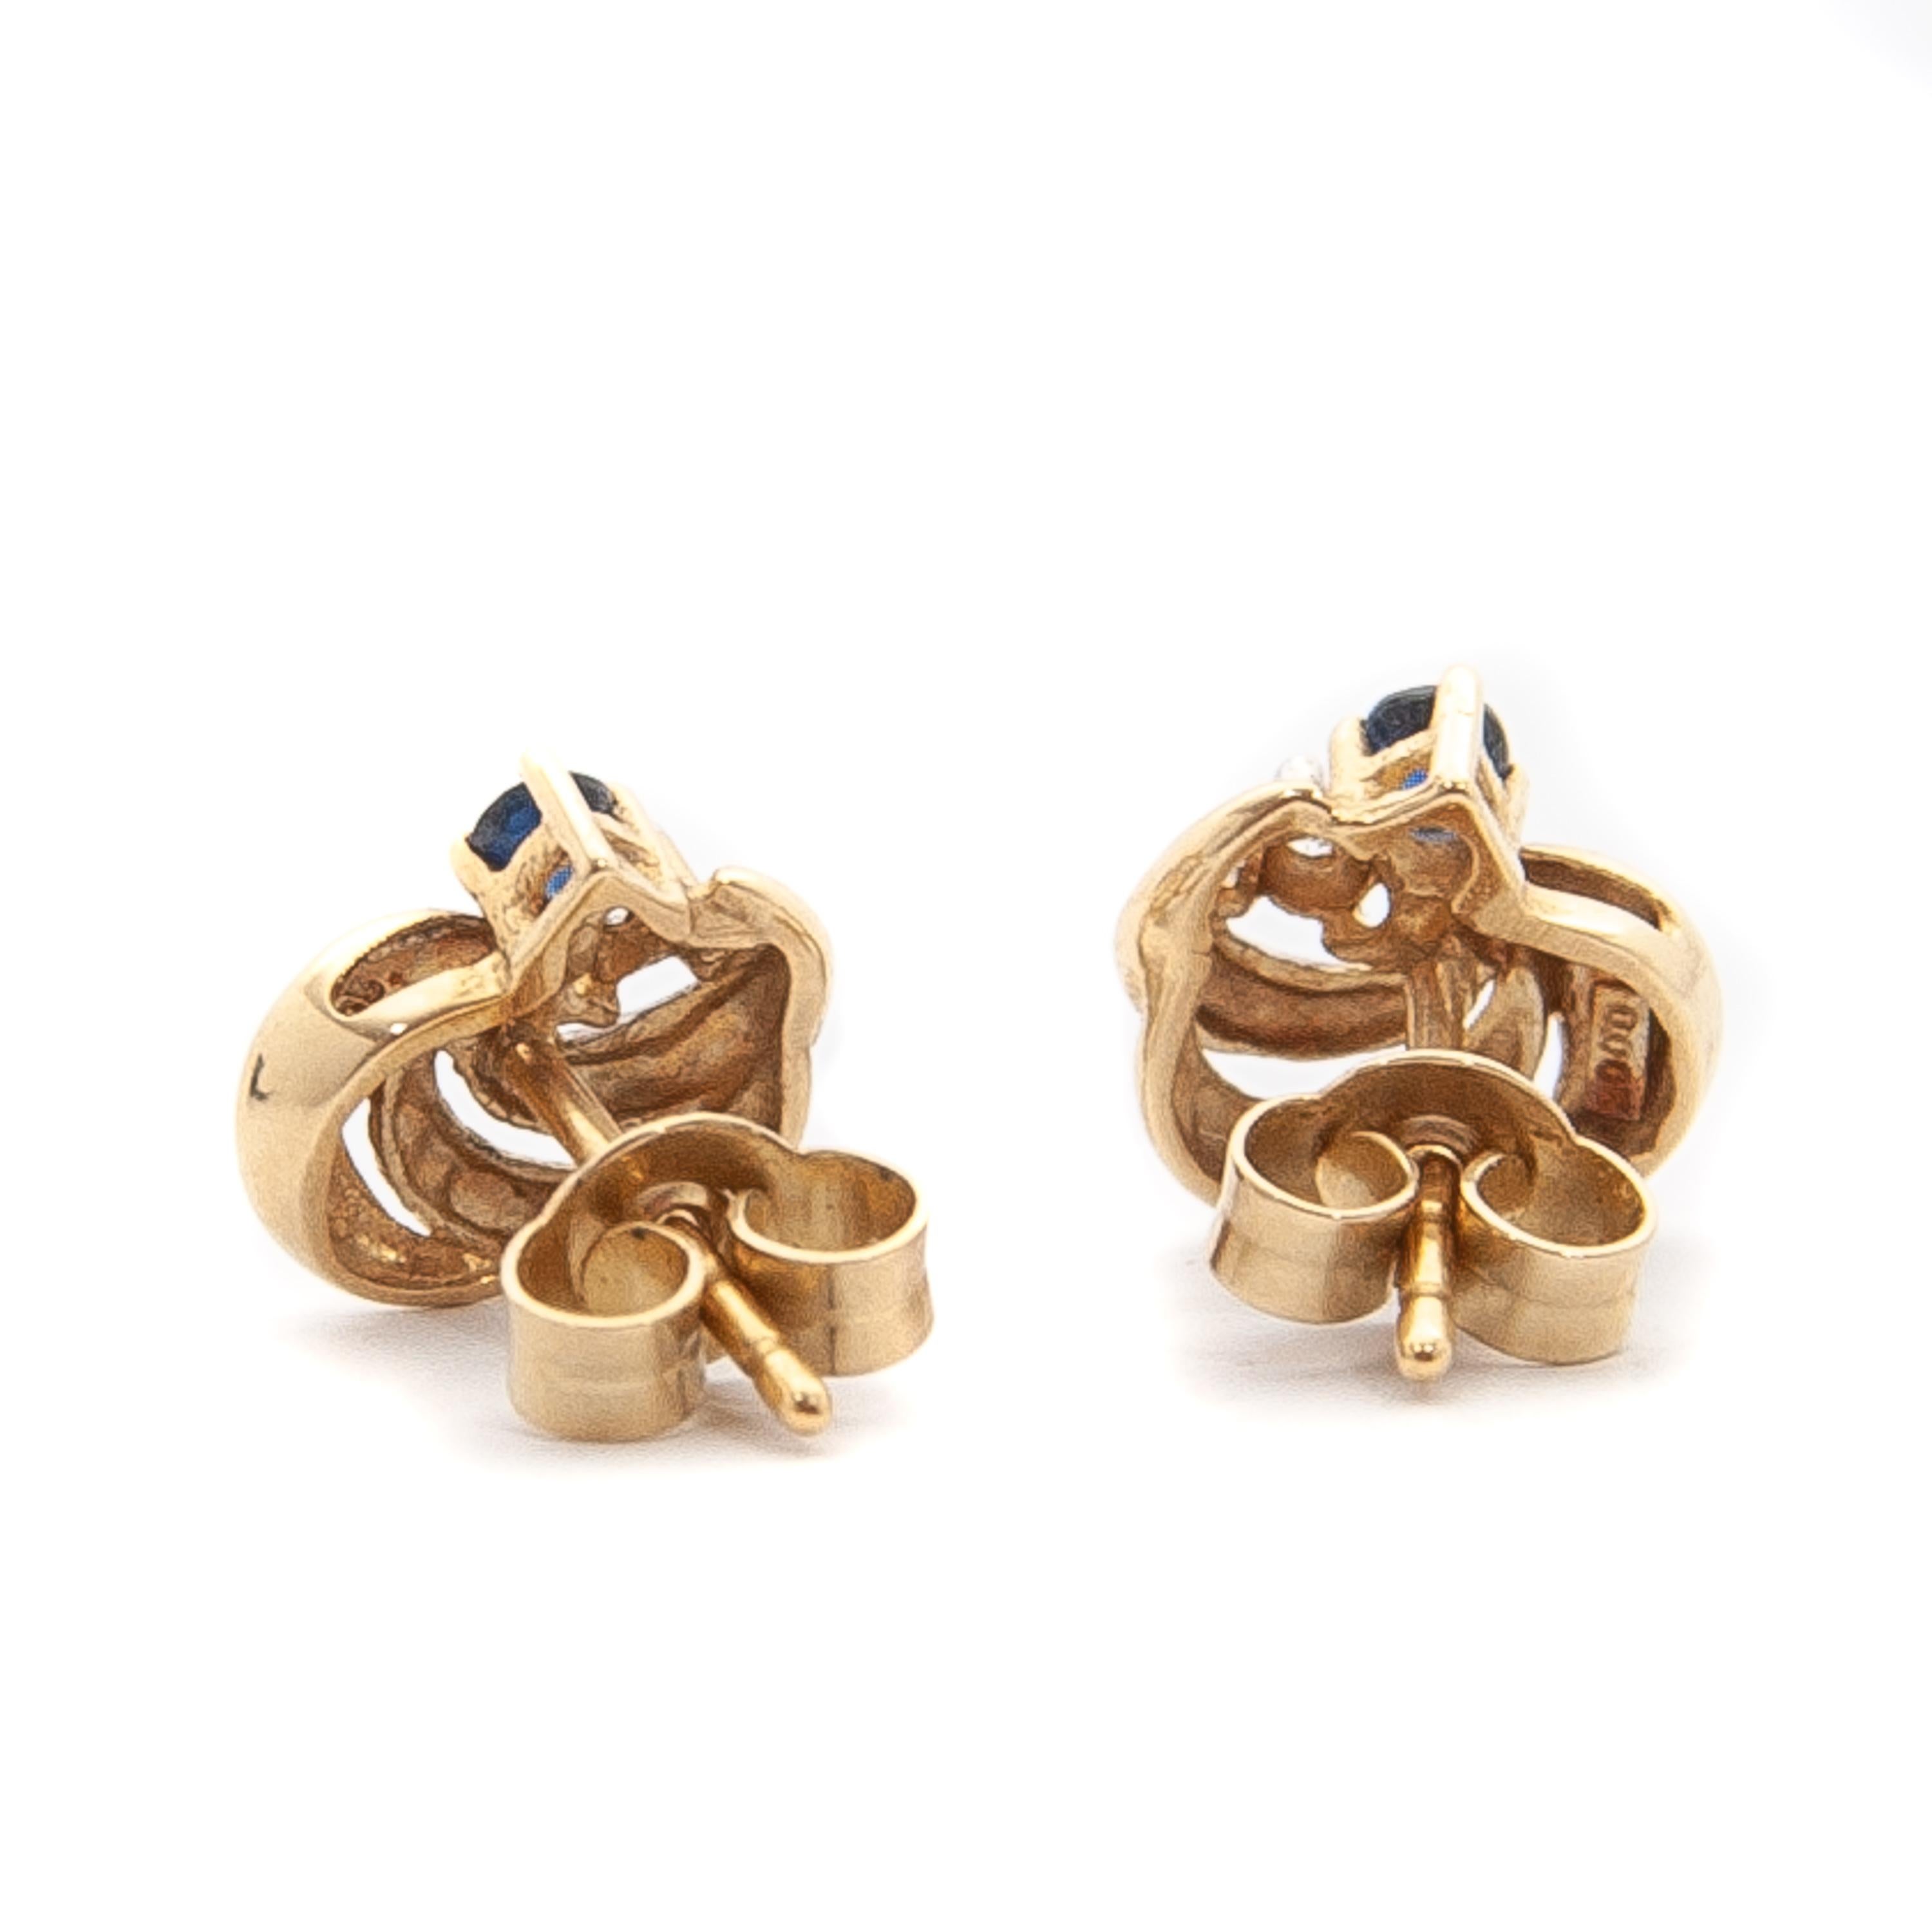 Brilliant Cut Sapphire Diamond 14K Gold Knot Earrings